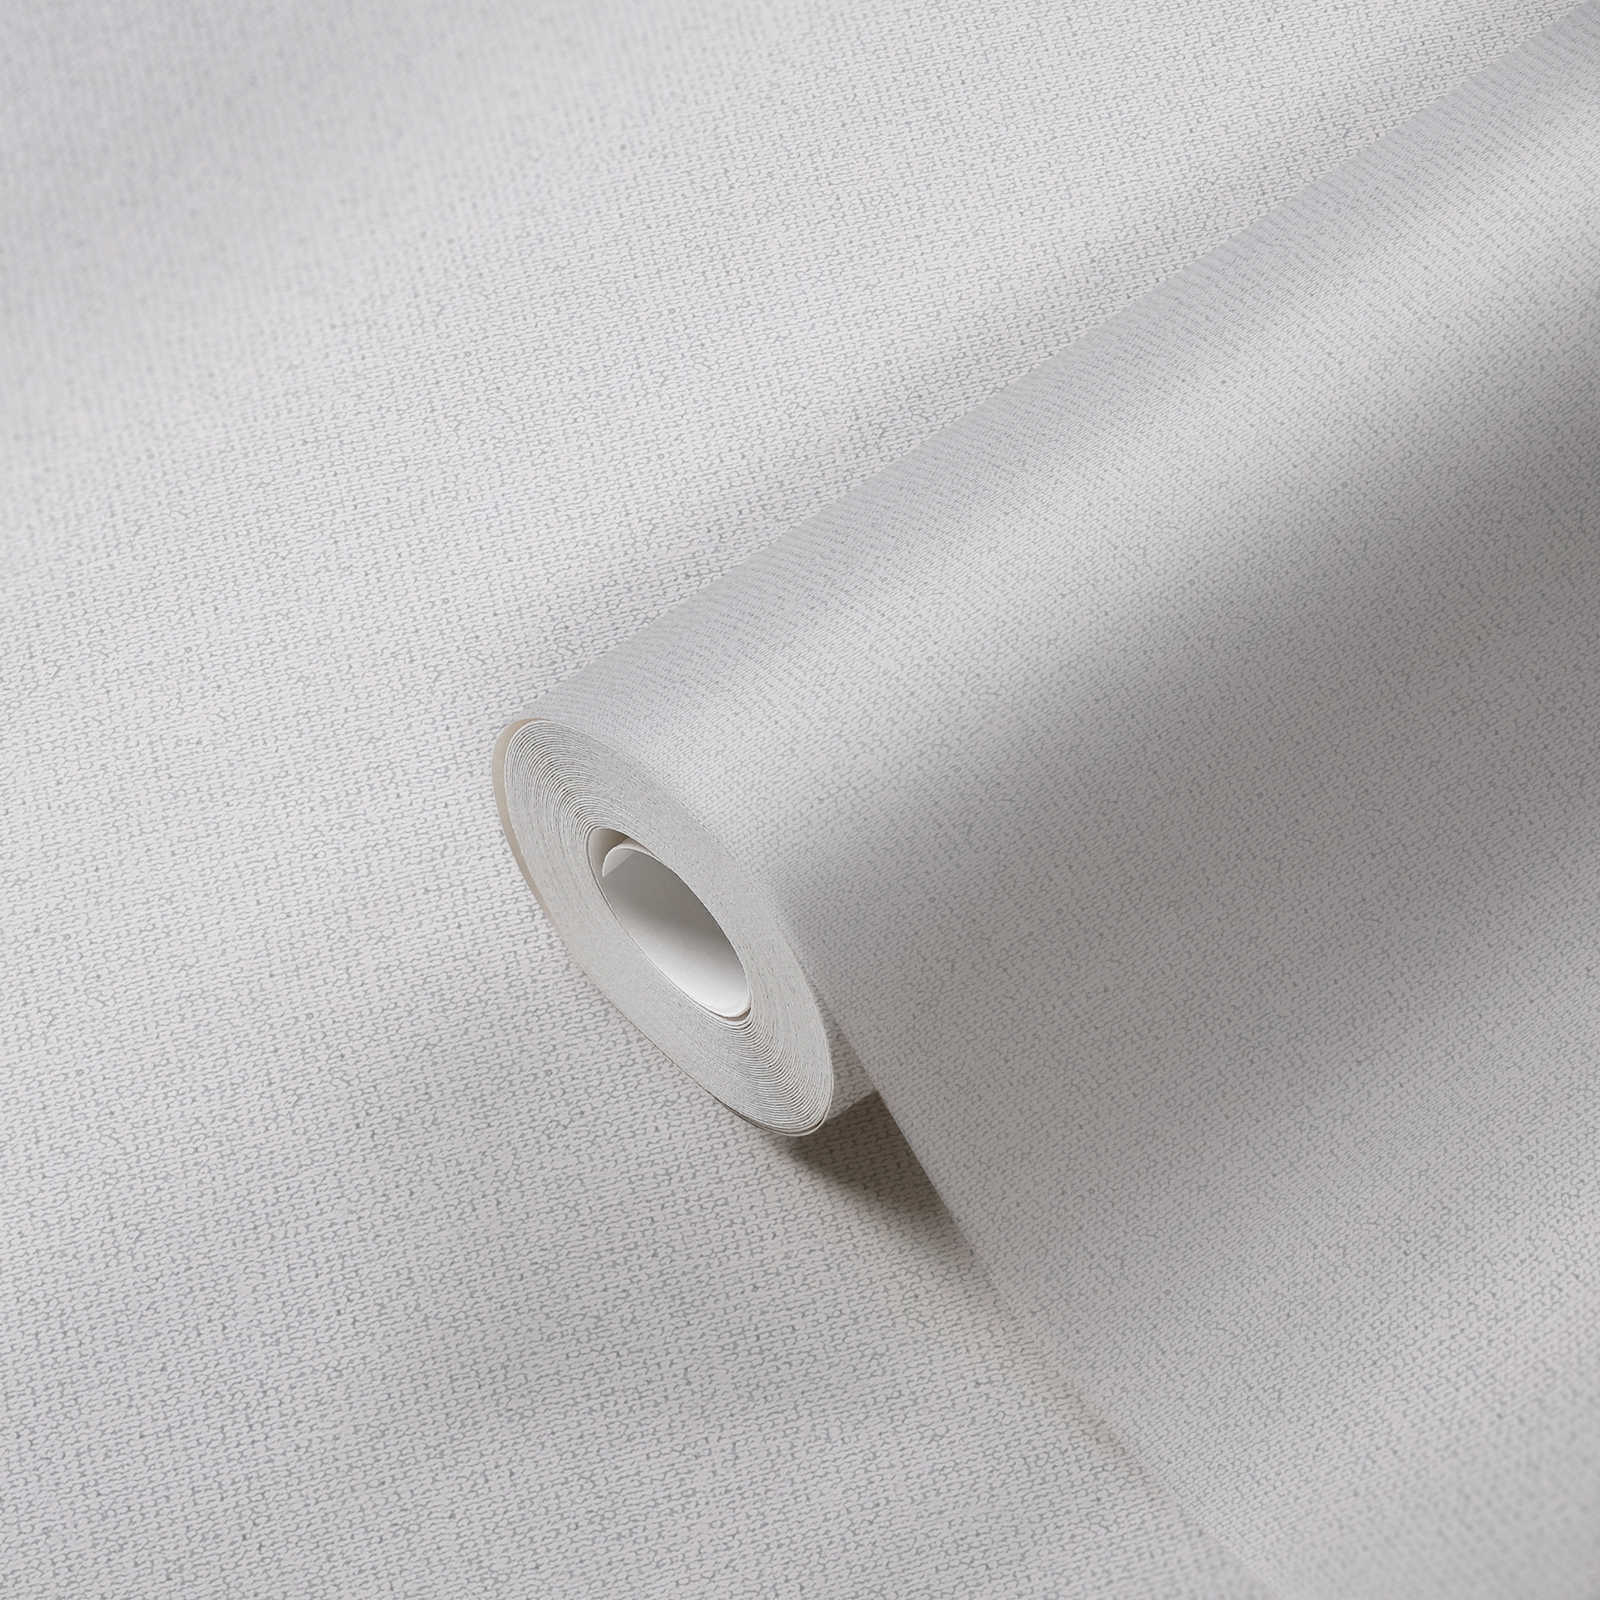             Plain wallpaper in matt linen look natural - light grey
        